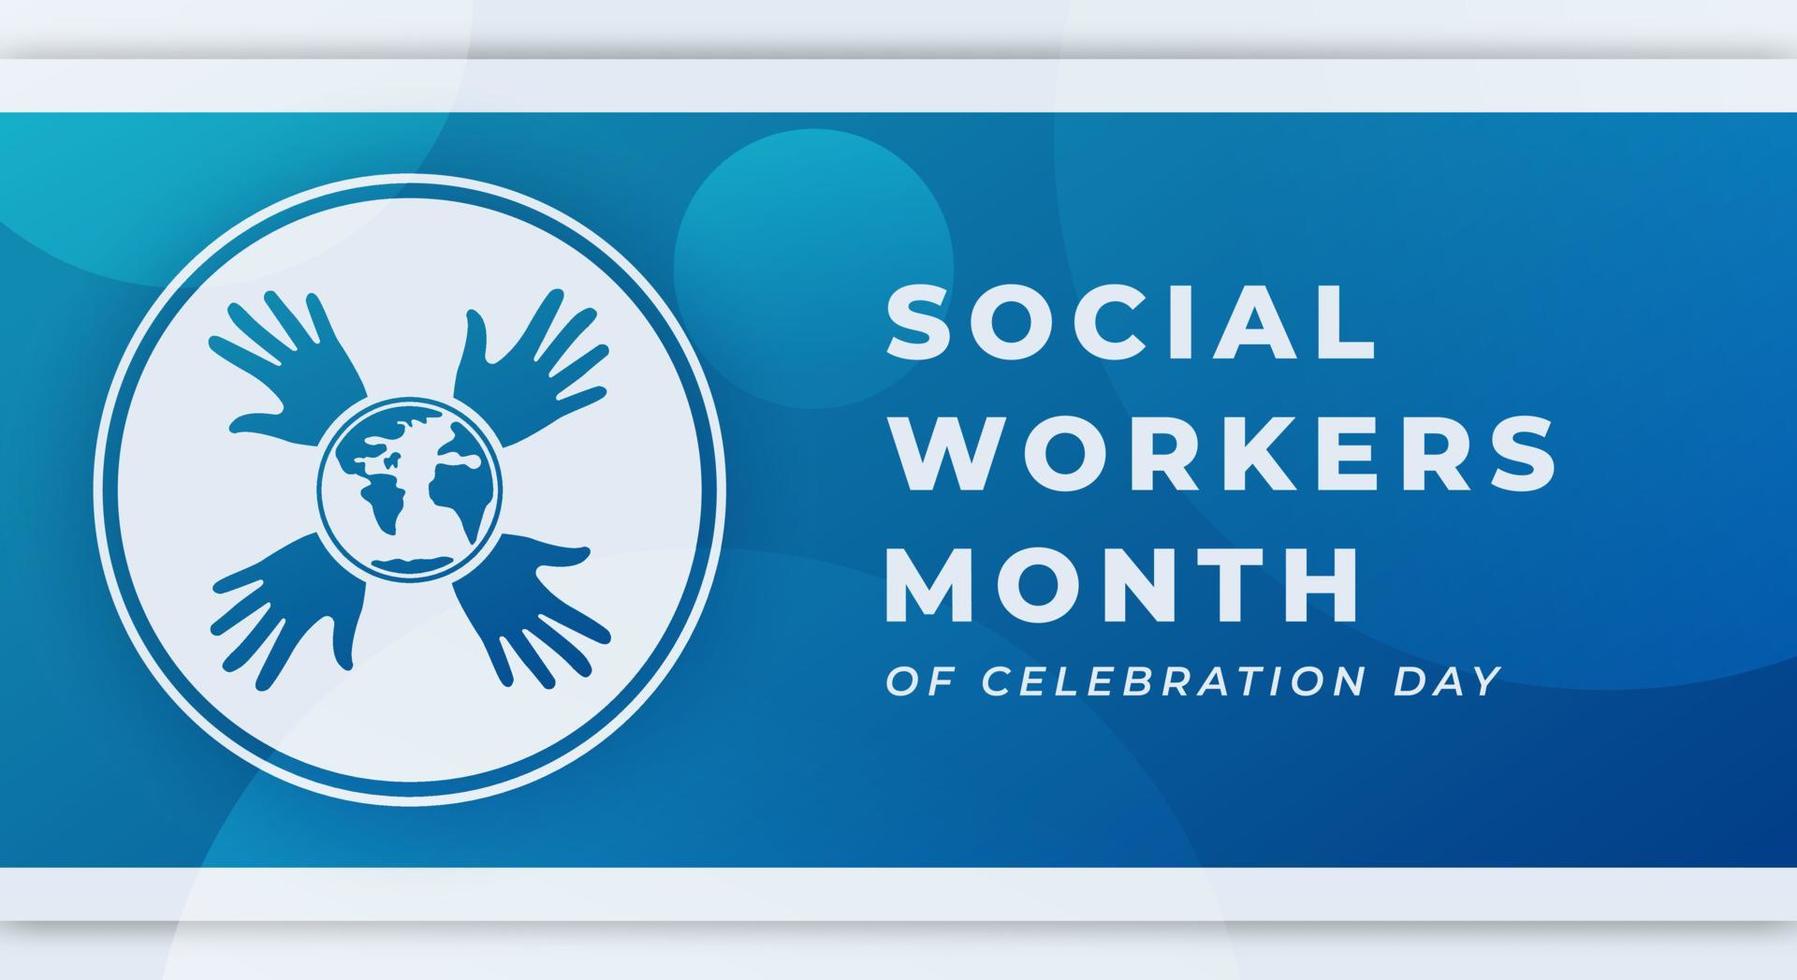 Happy Social Work Month Celebration Vector Design Illustration for Background, Poster, Banner, Advertising, Greeting Card